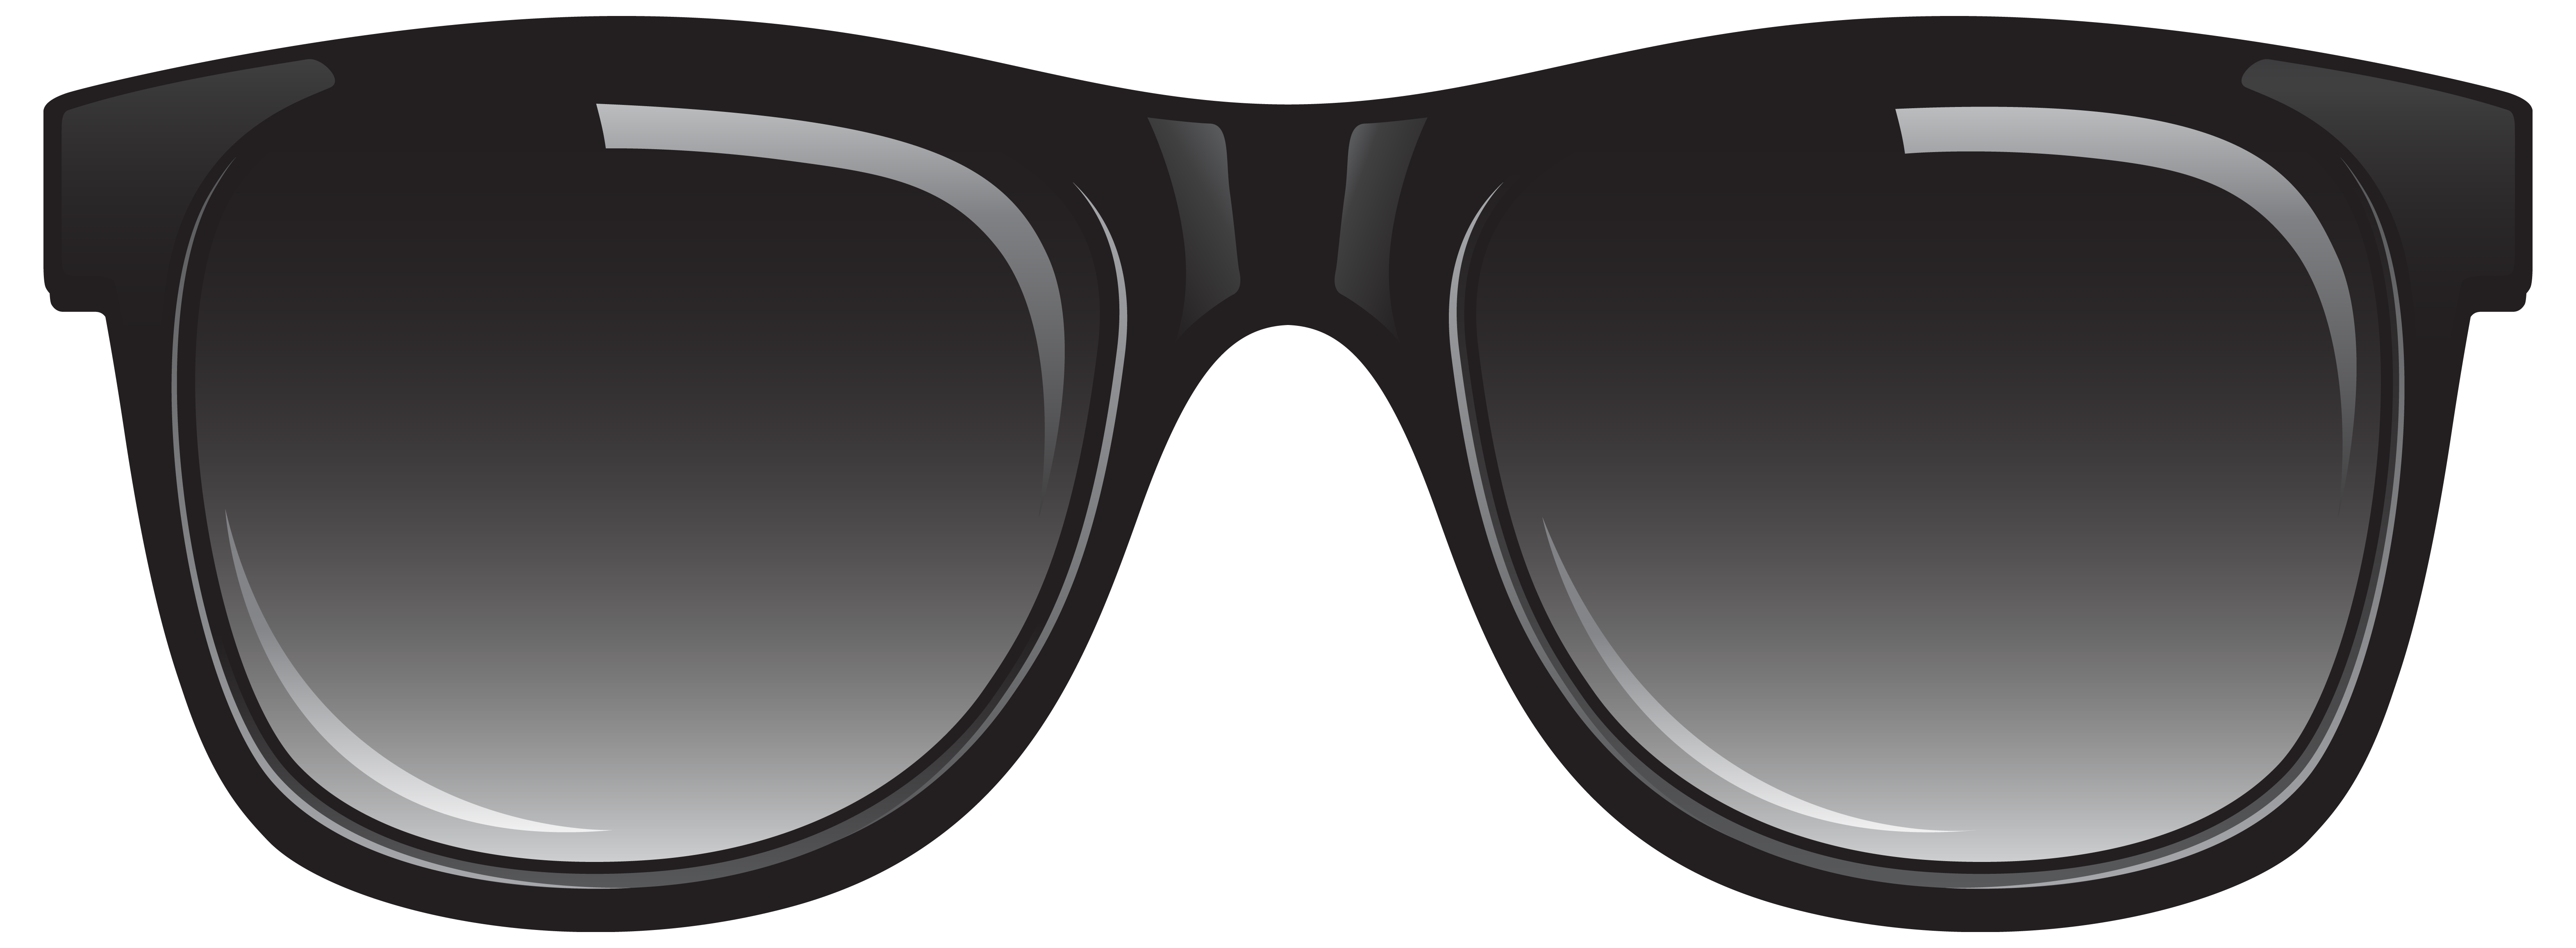 Clipart sunglasses animated, Clipart sunglasses animated